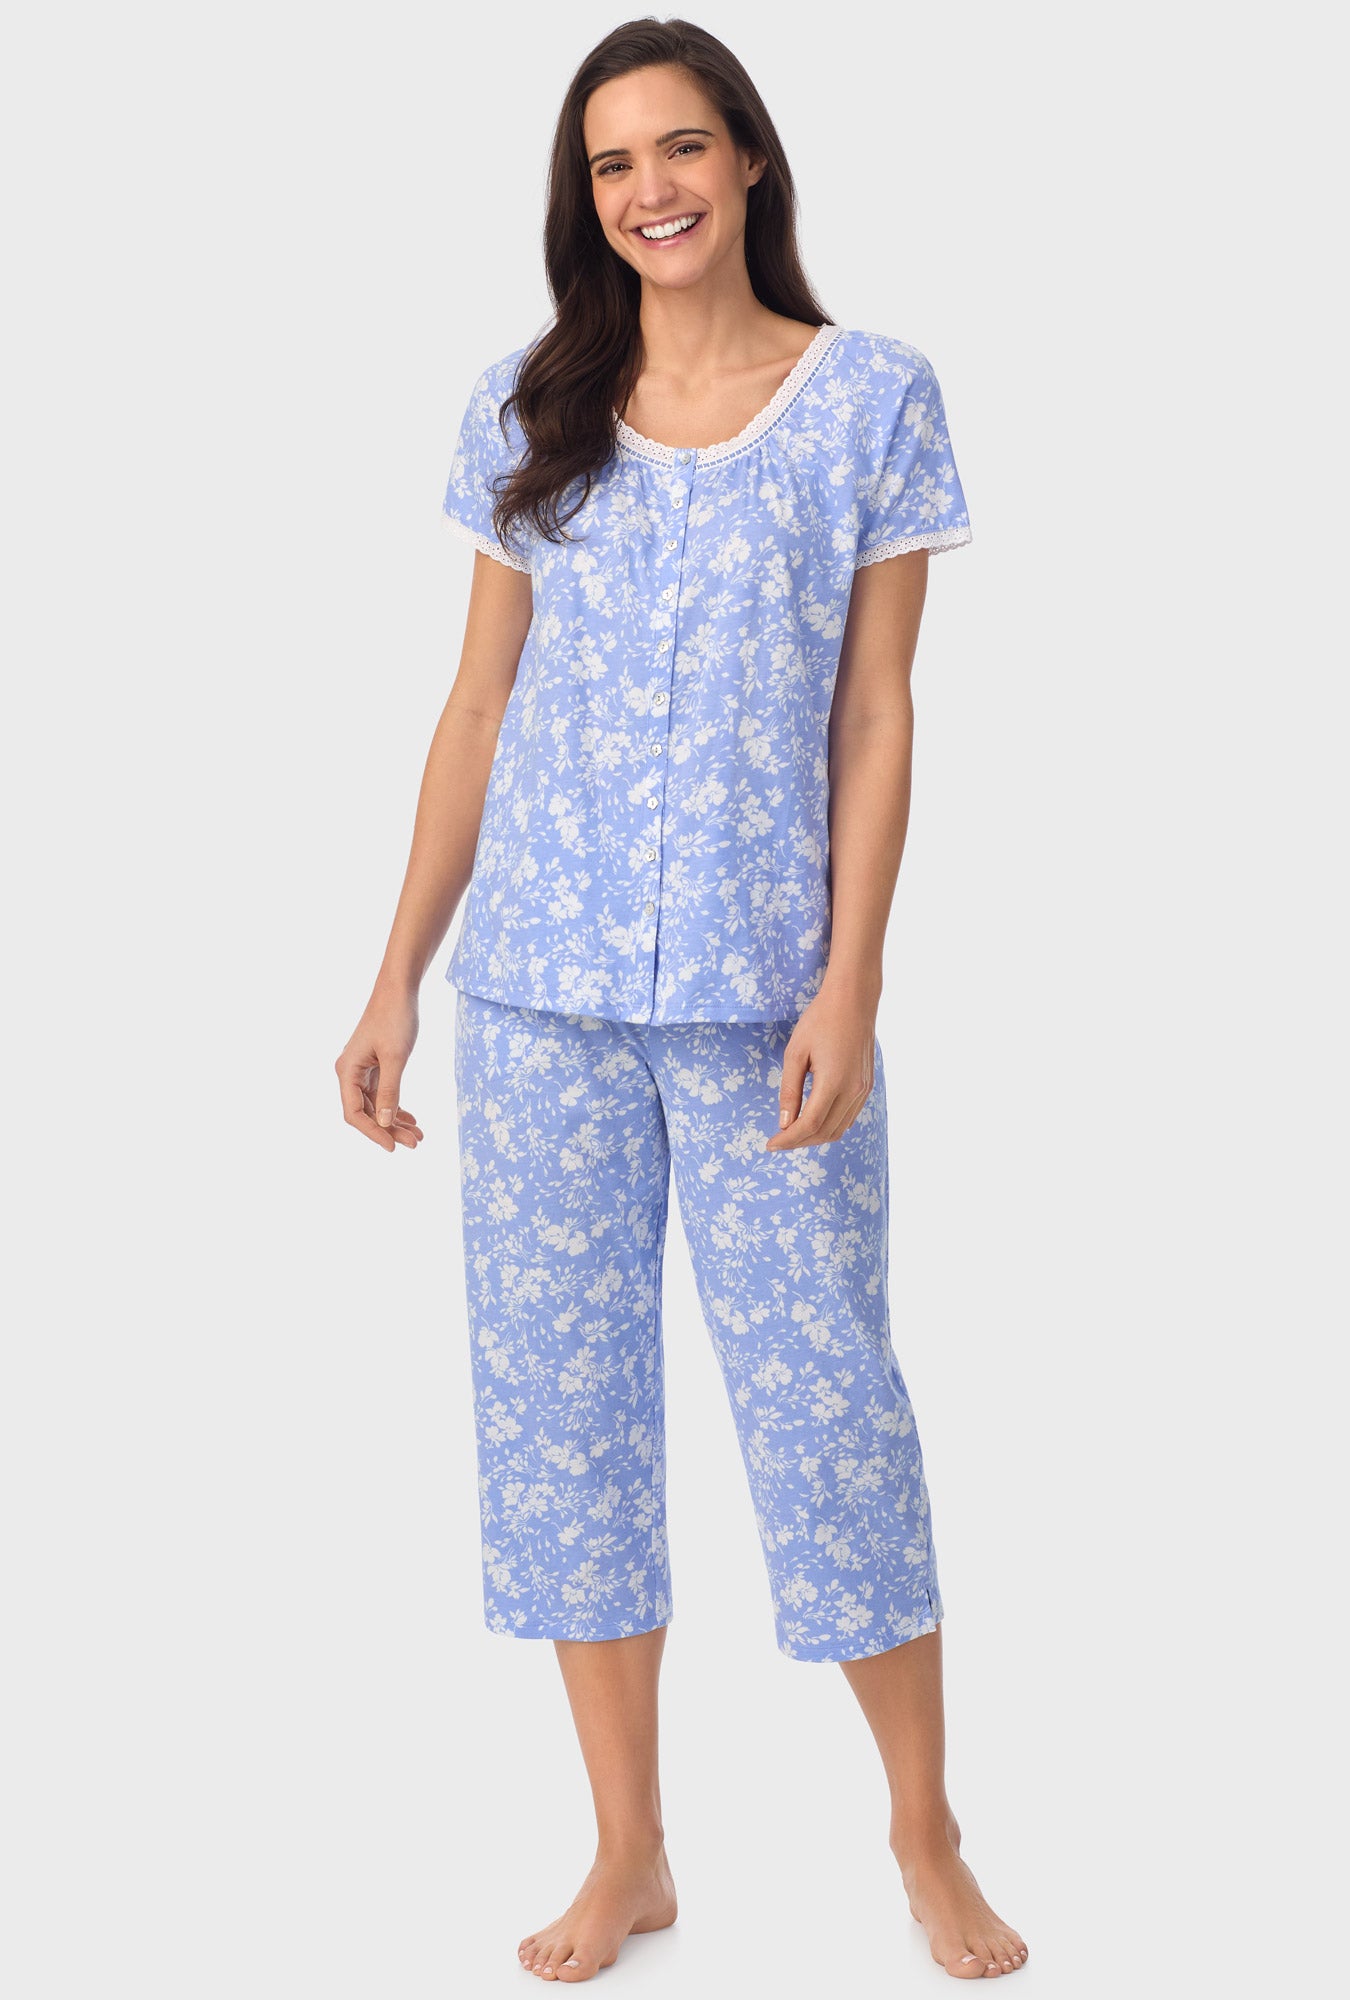 A lady wearing blue short Sleeve Floral Cap Sleeve Capri Pant PJ Set  with Powder Blue print